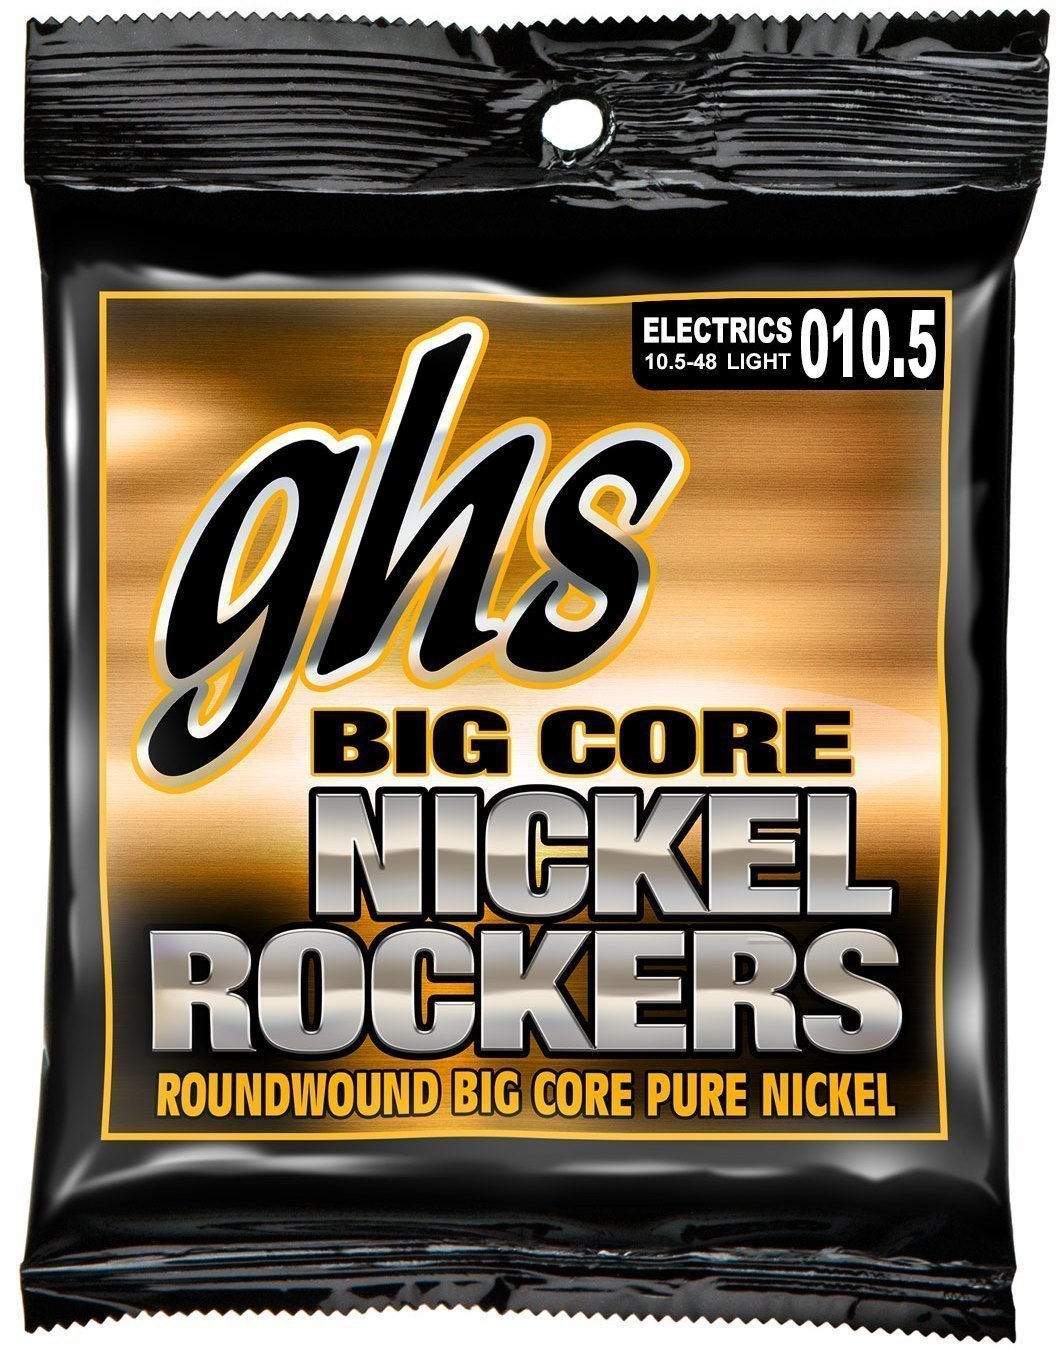 Struny pre elektrickú gitaru GHS Big Core Nickel Rockers 10,5-48